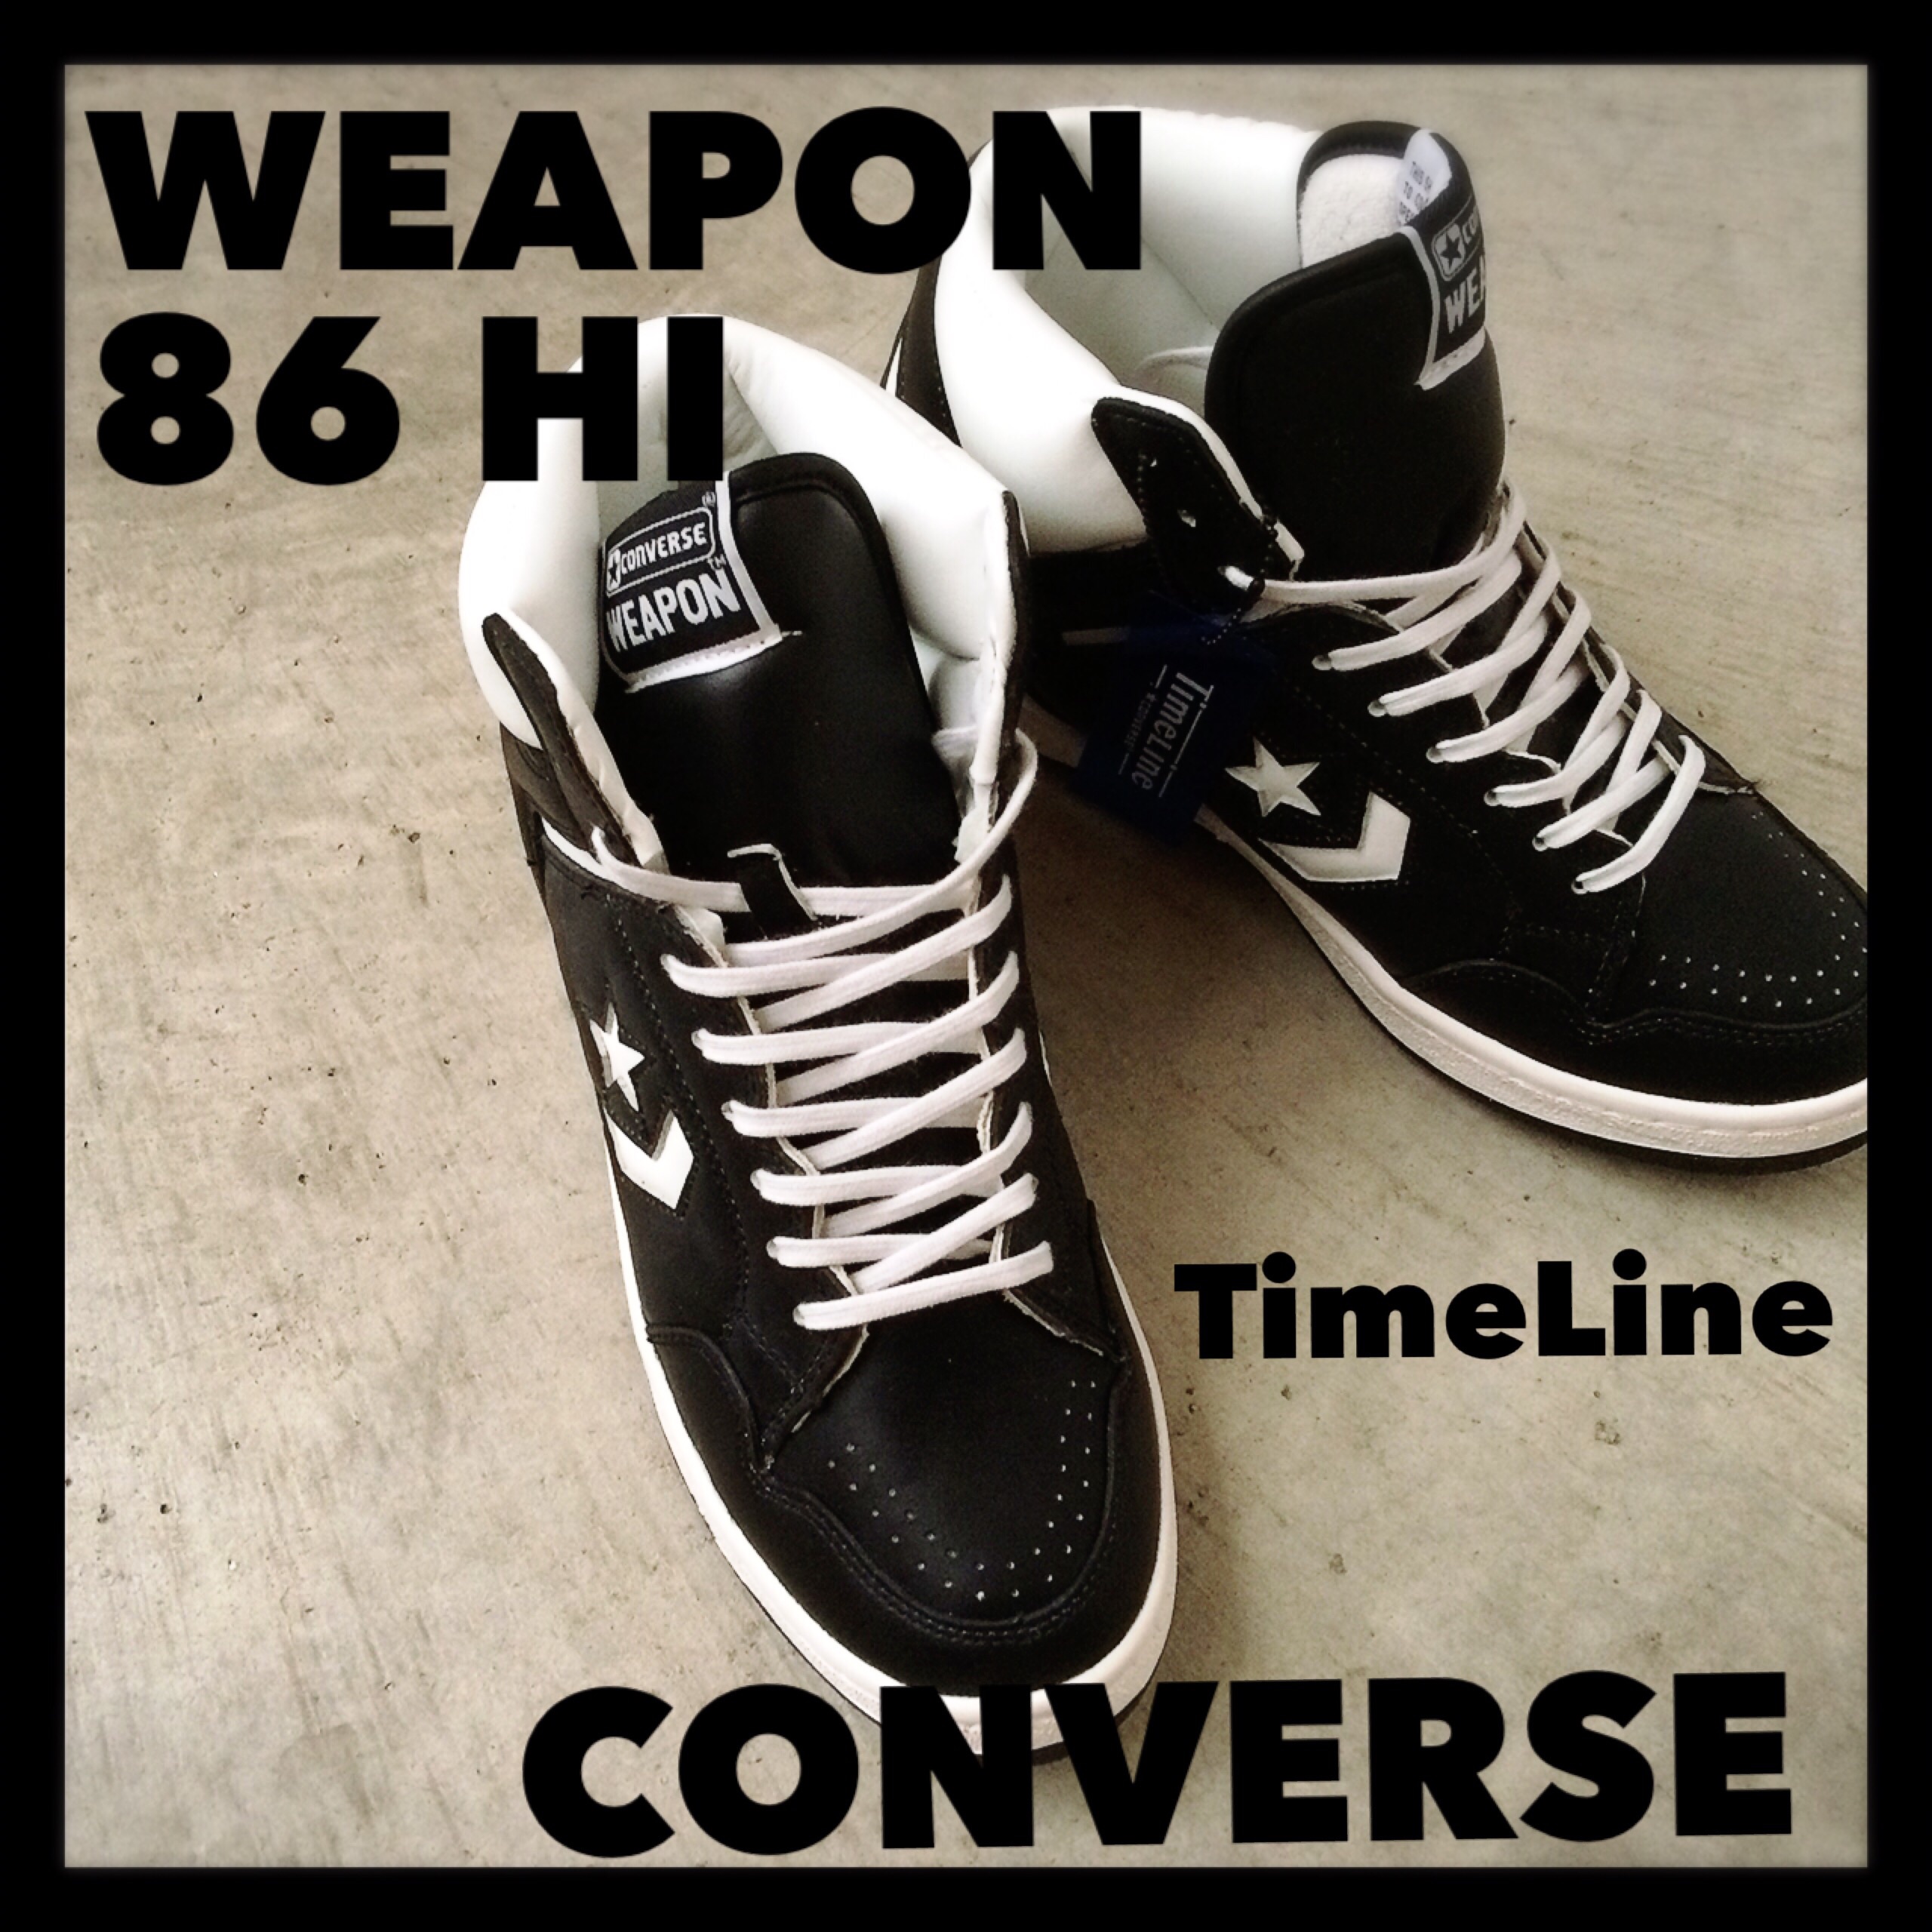 converse weapon timeline